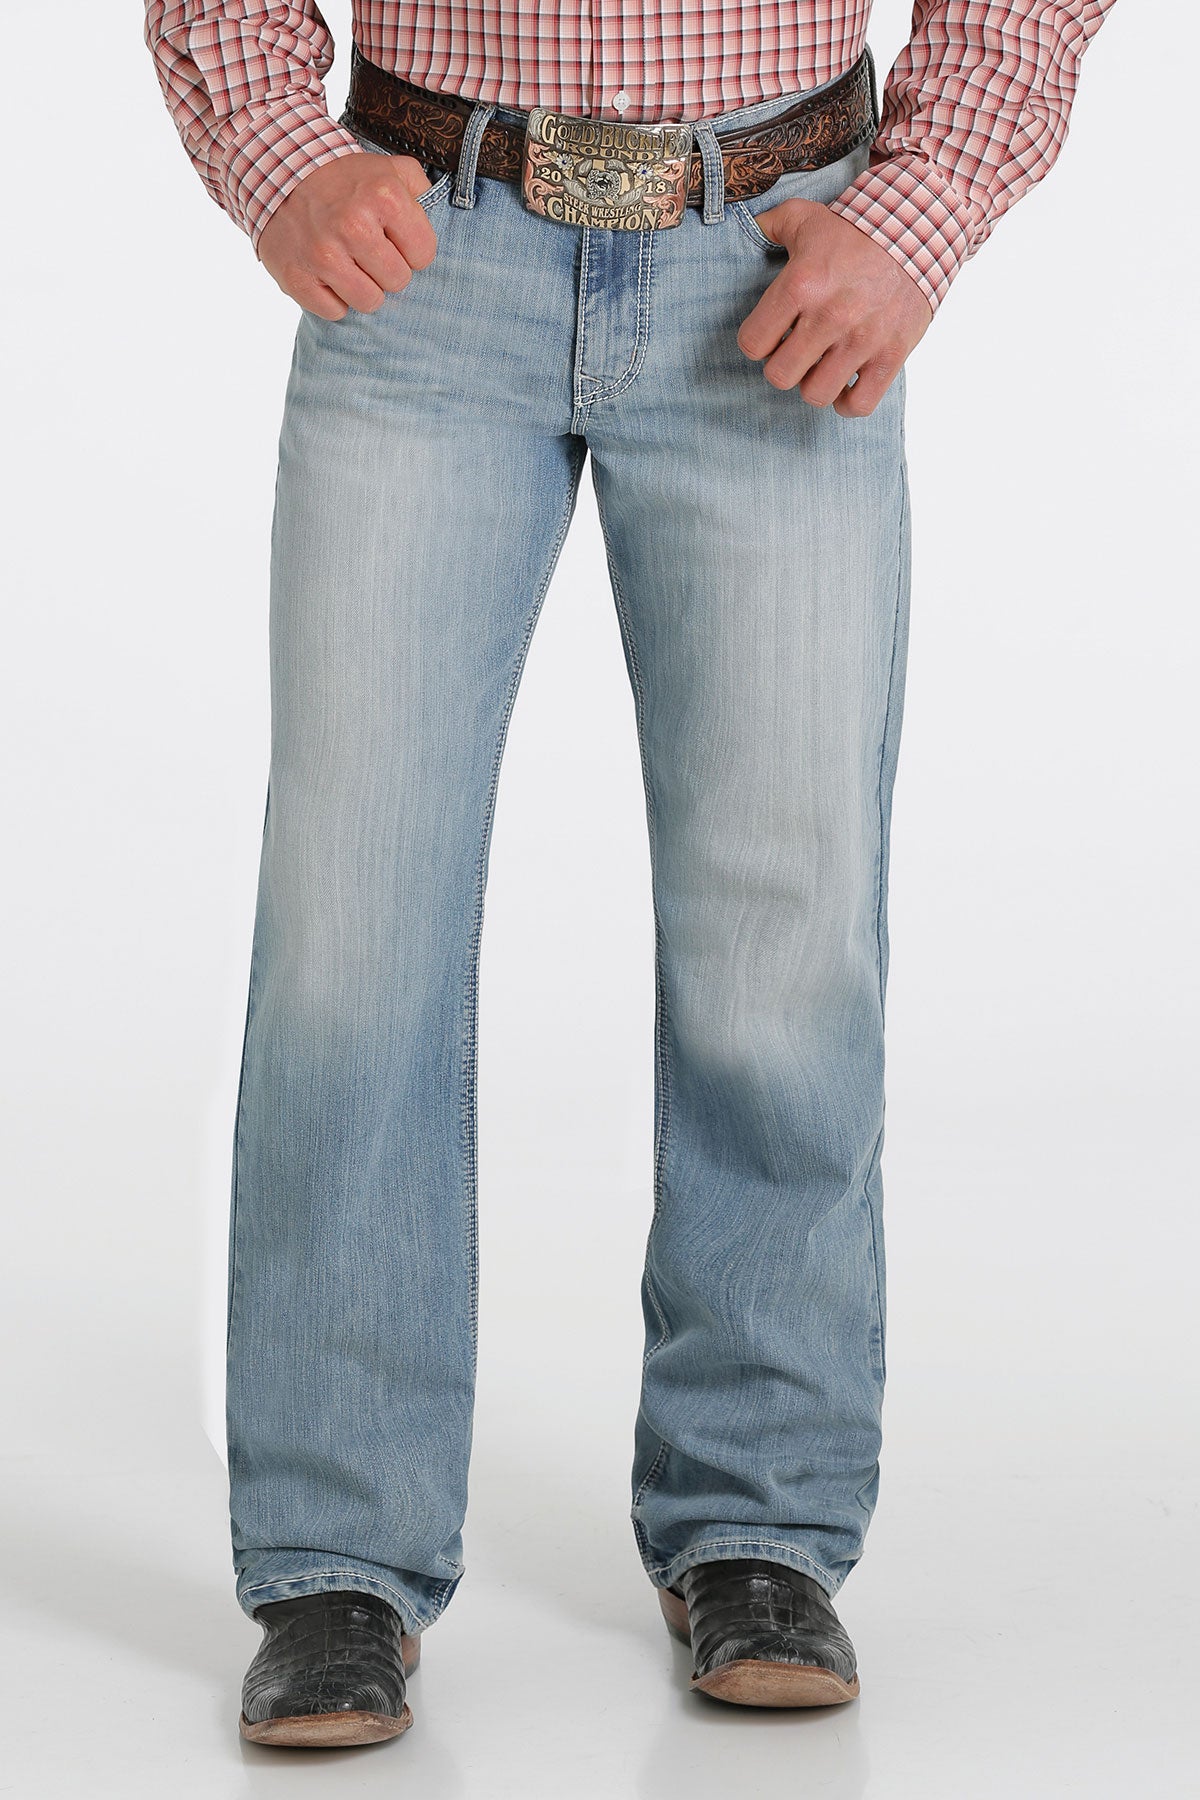 Cinch Men's Grant Bootcut Jeans - Mid Rise, Relaxed, Dark Stonewash –  Rockin R Western Store LLC